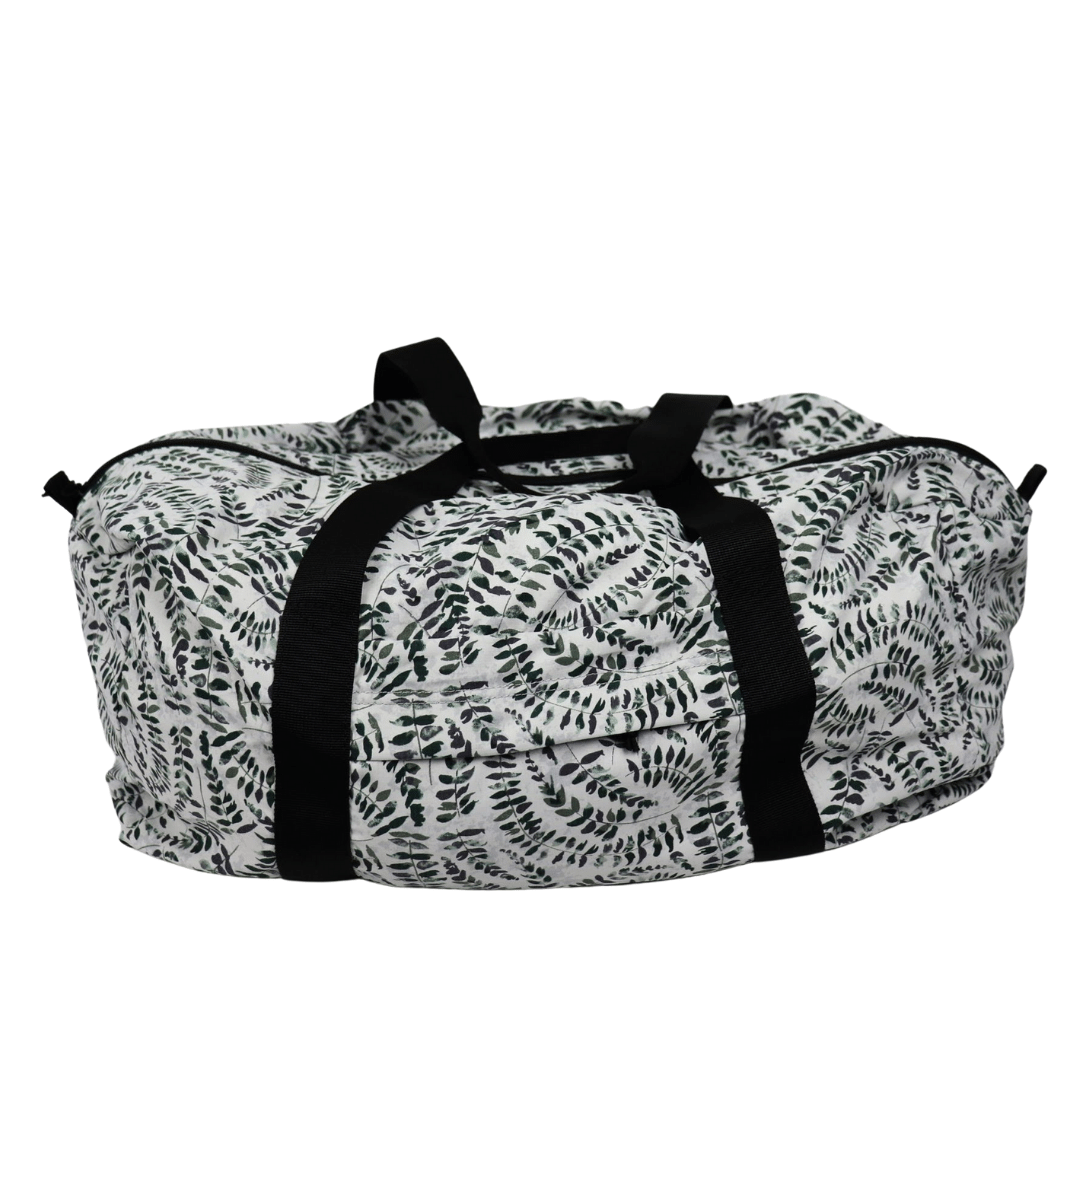 The Packable Duffel Bag